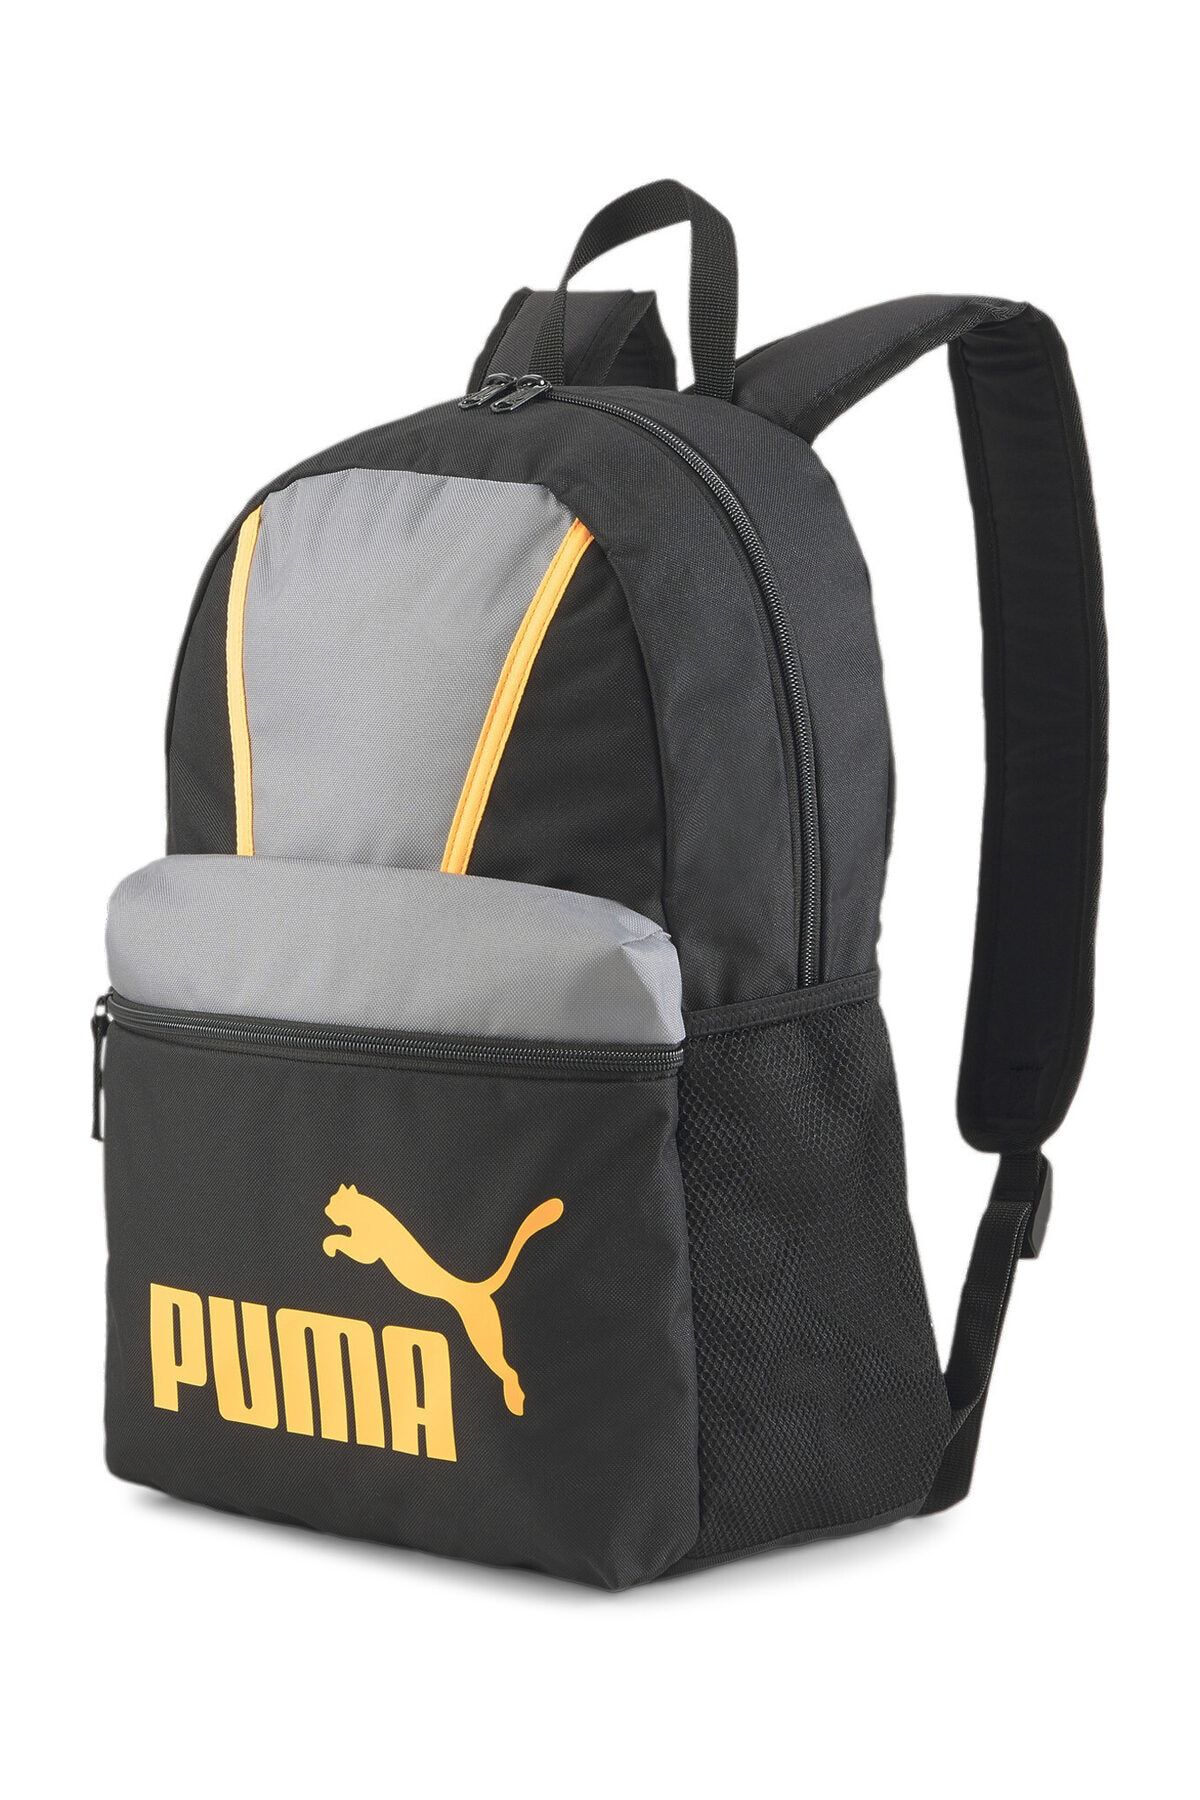 Puma کوله پشتی یونیسکس - فاز PUMA مسدود کردن مشکی- 07896203